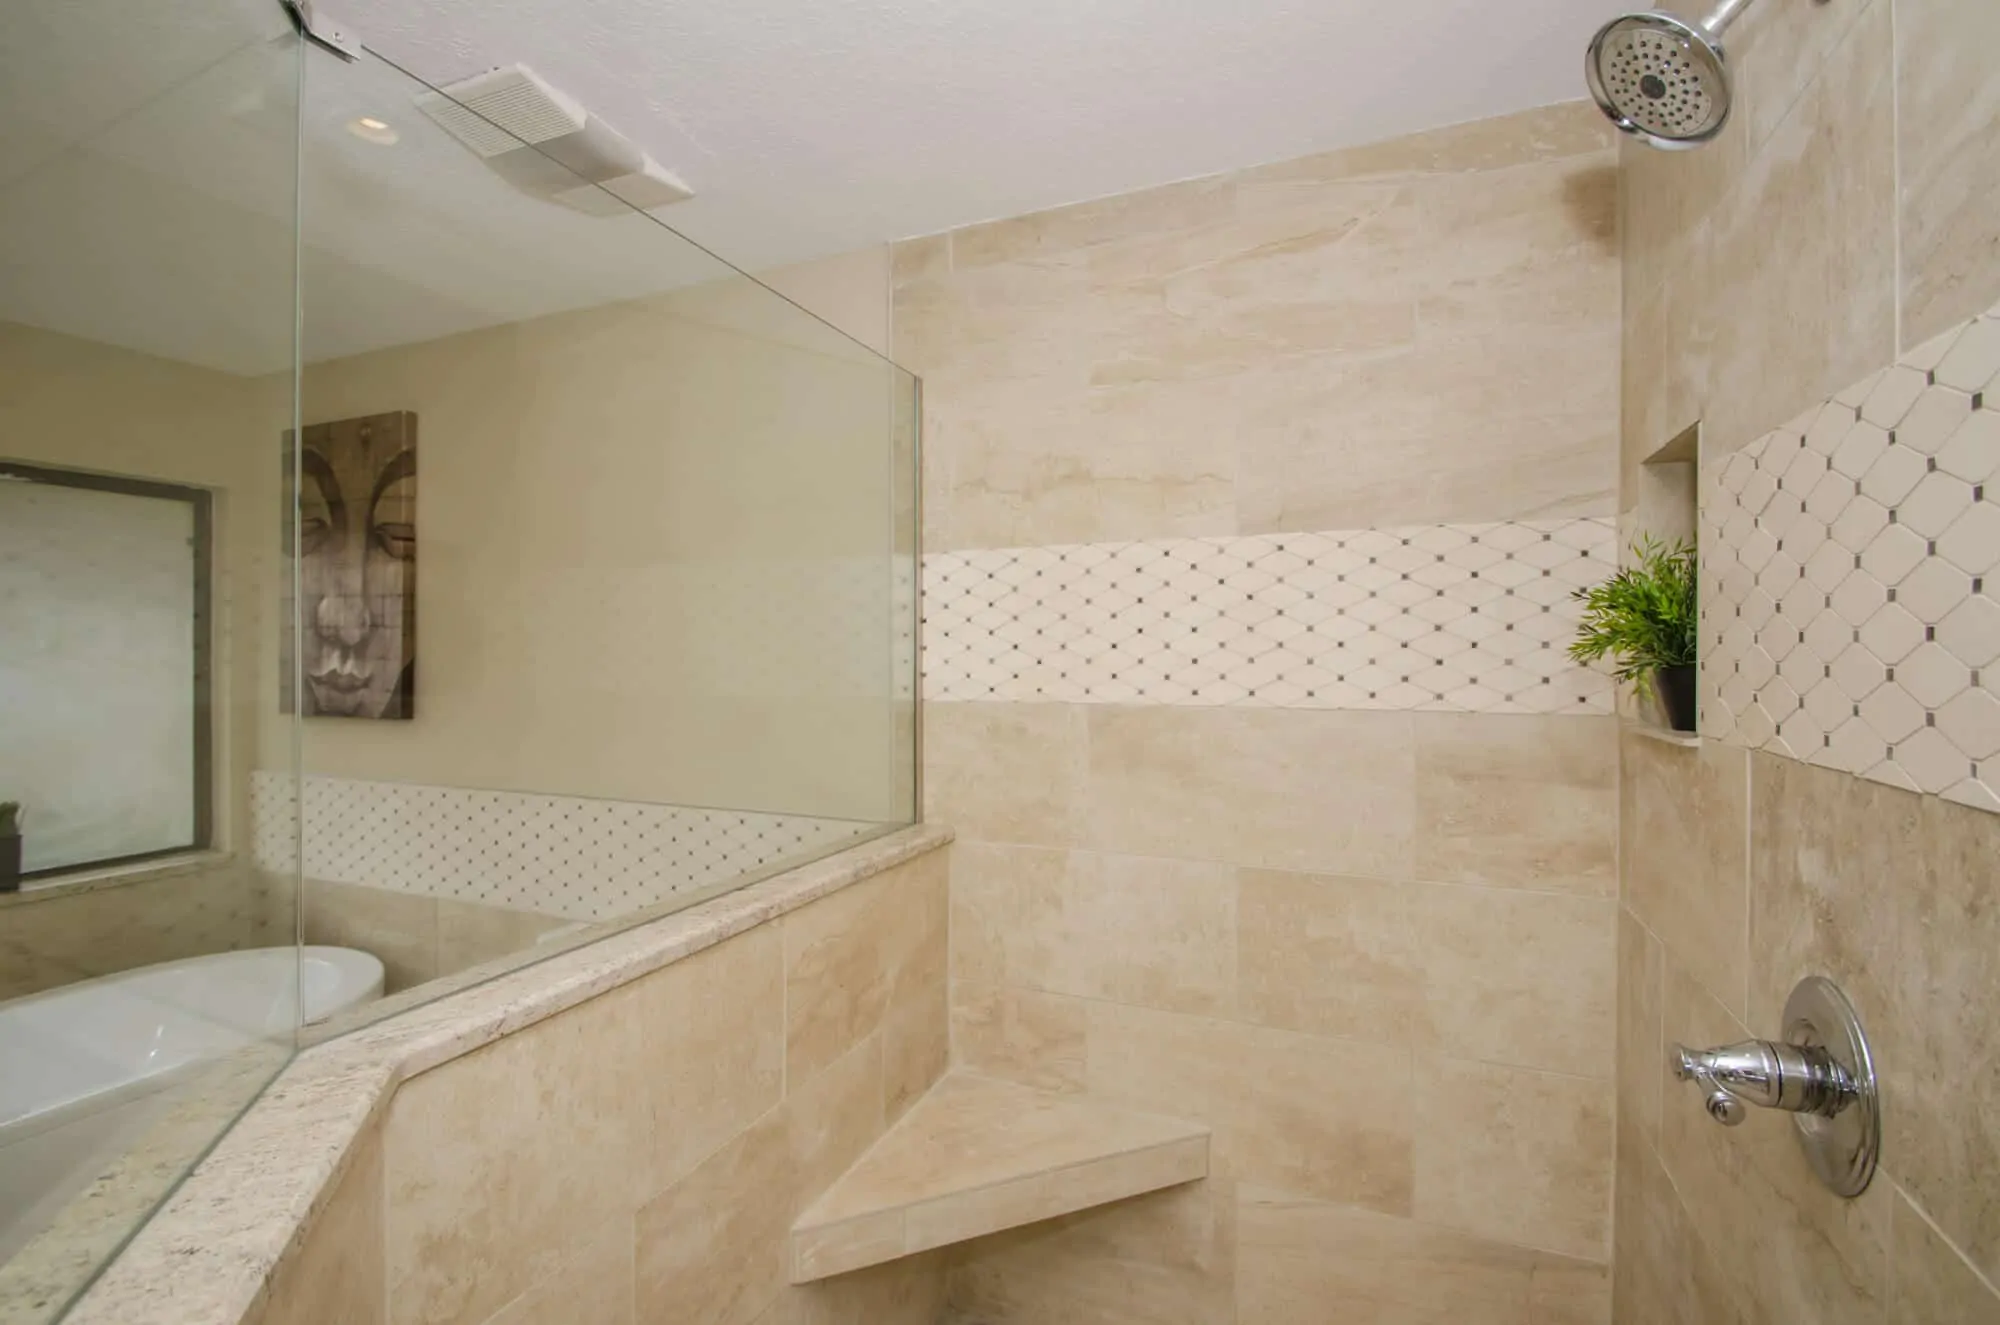 Bath shower remodel